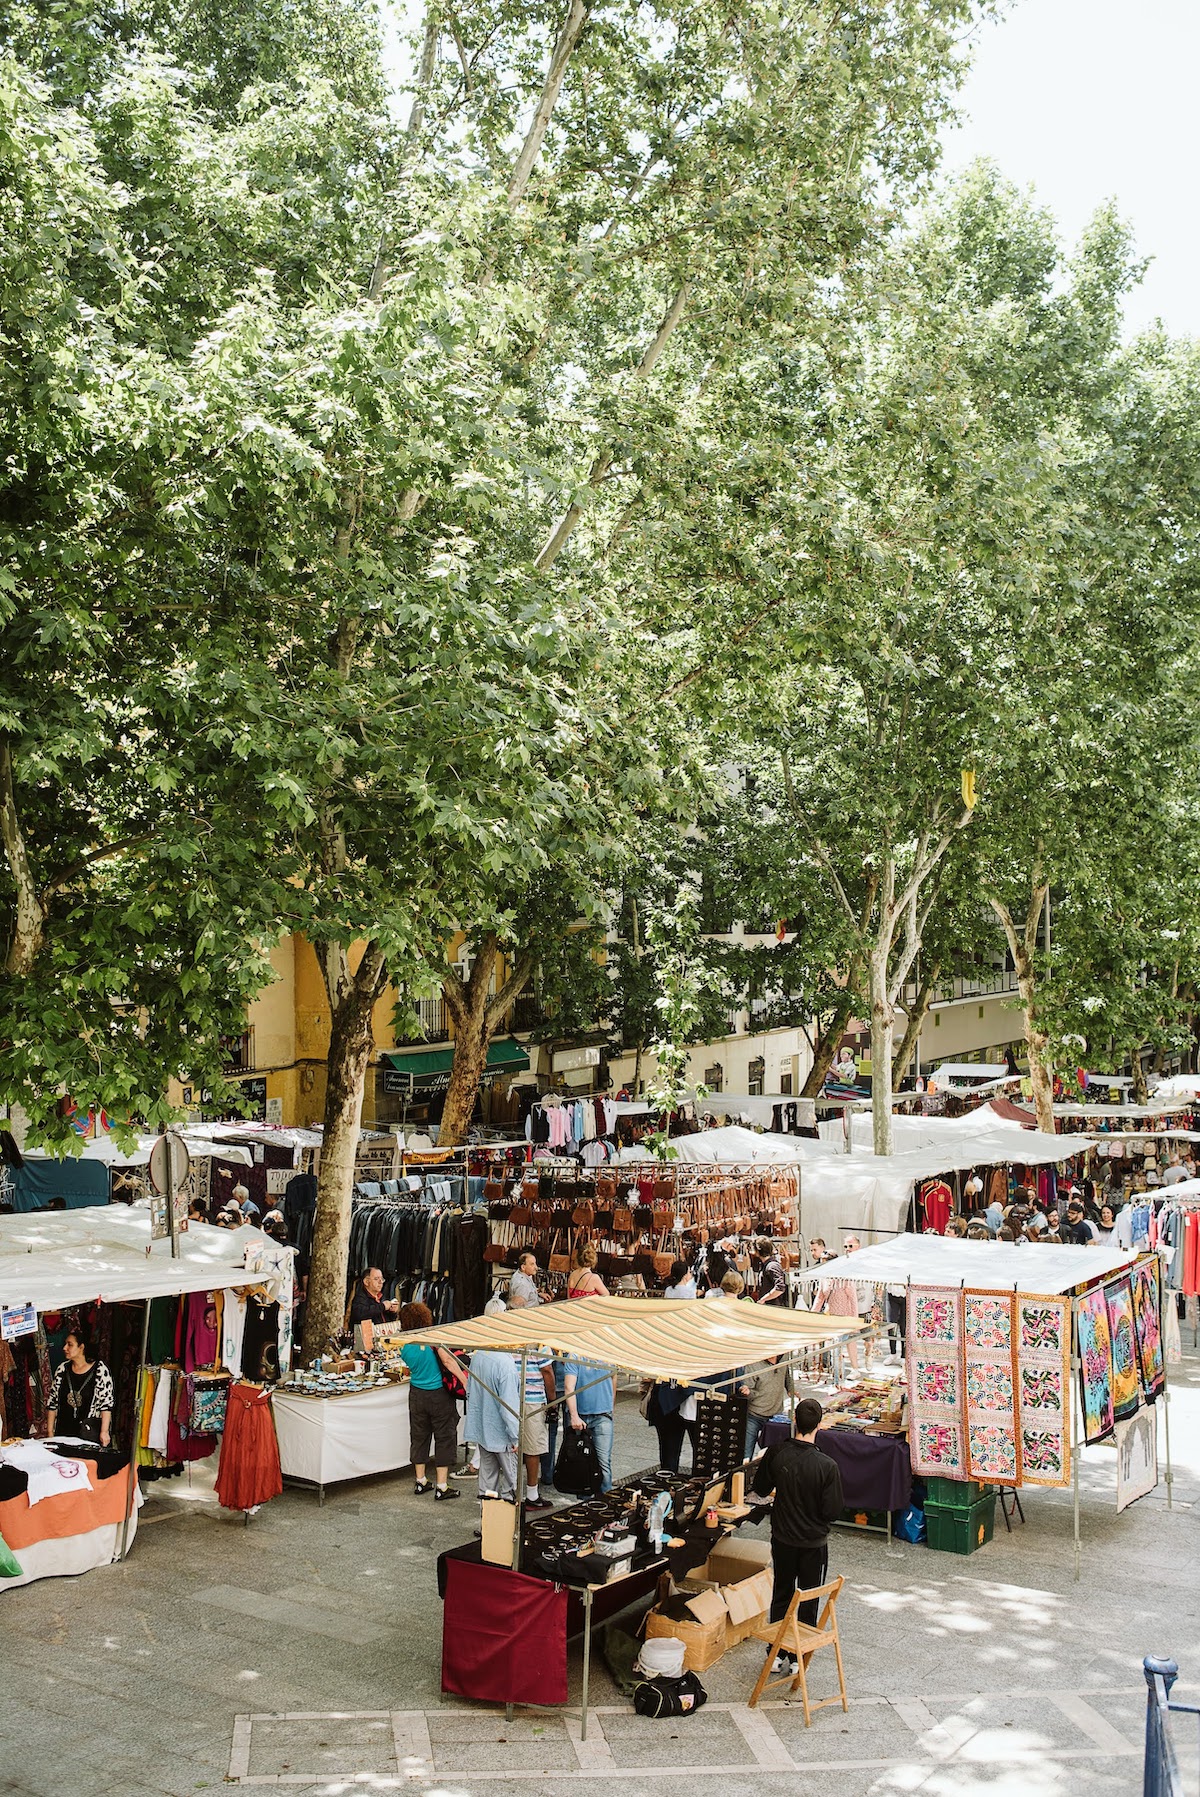 Flea market stalls beneath leafy green trees.